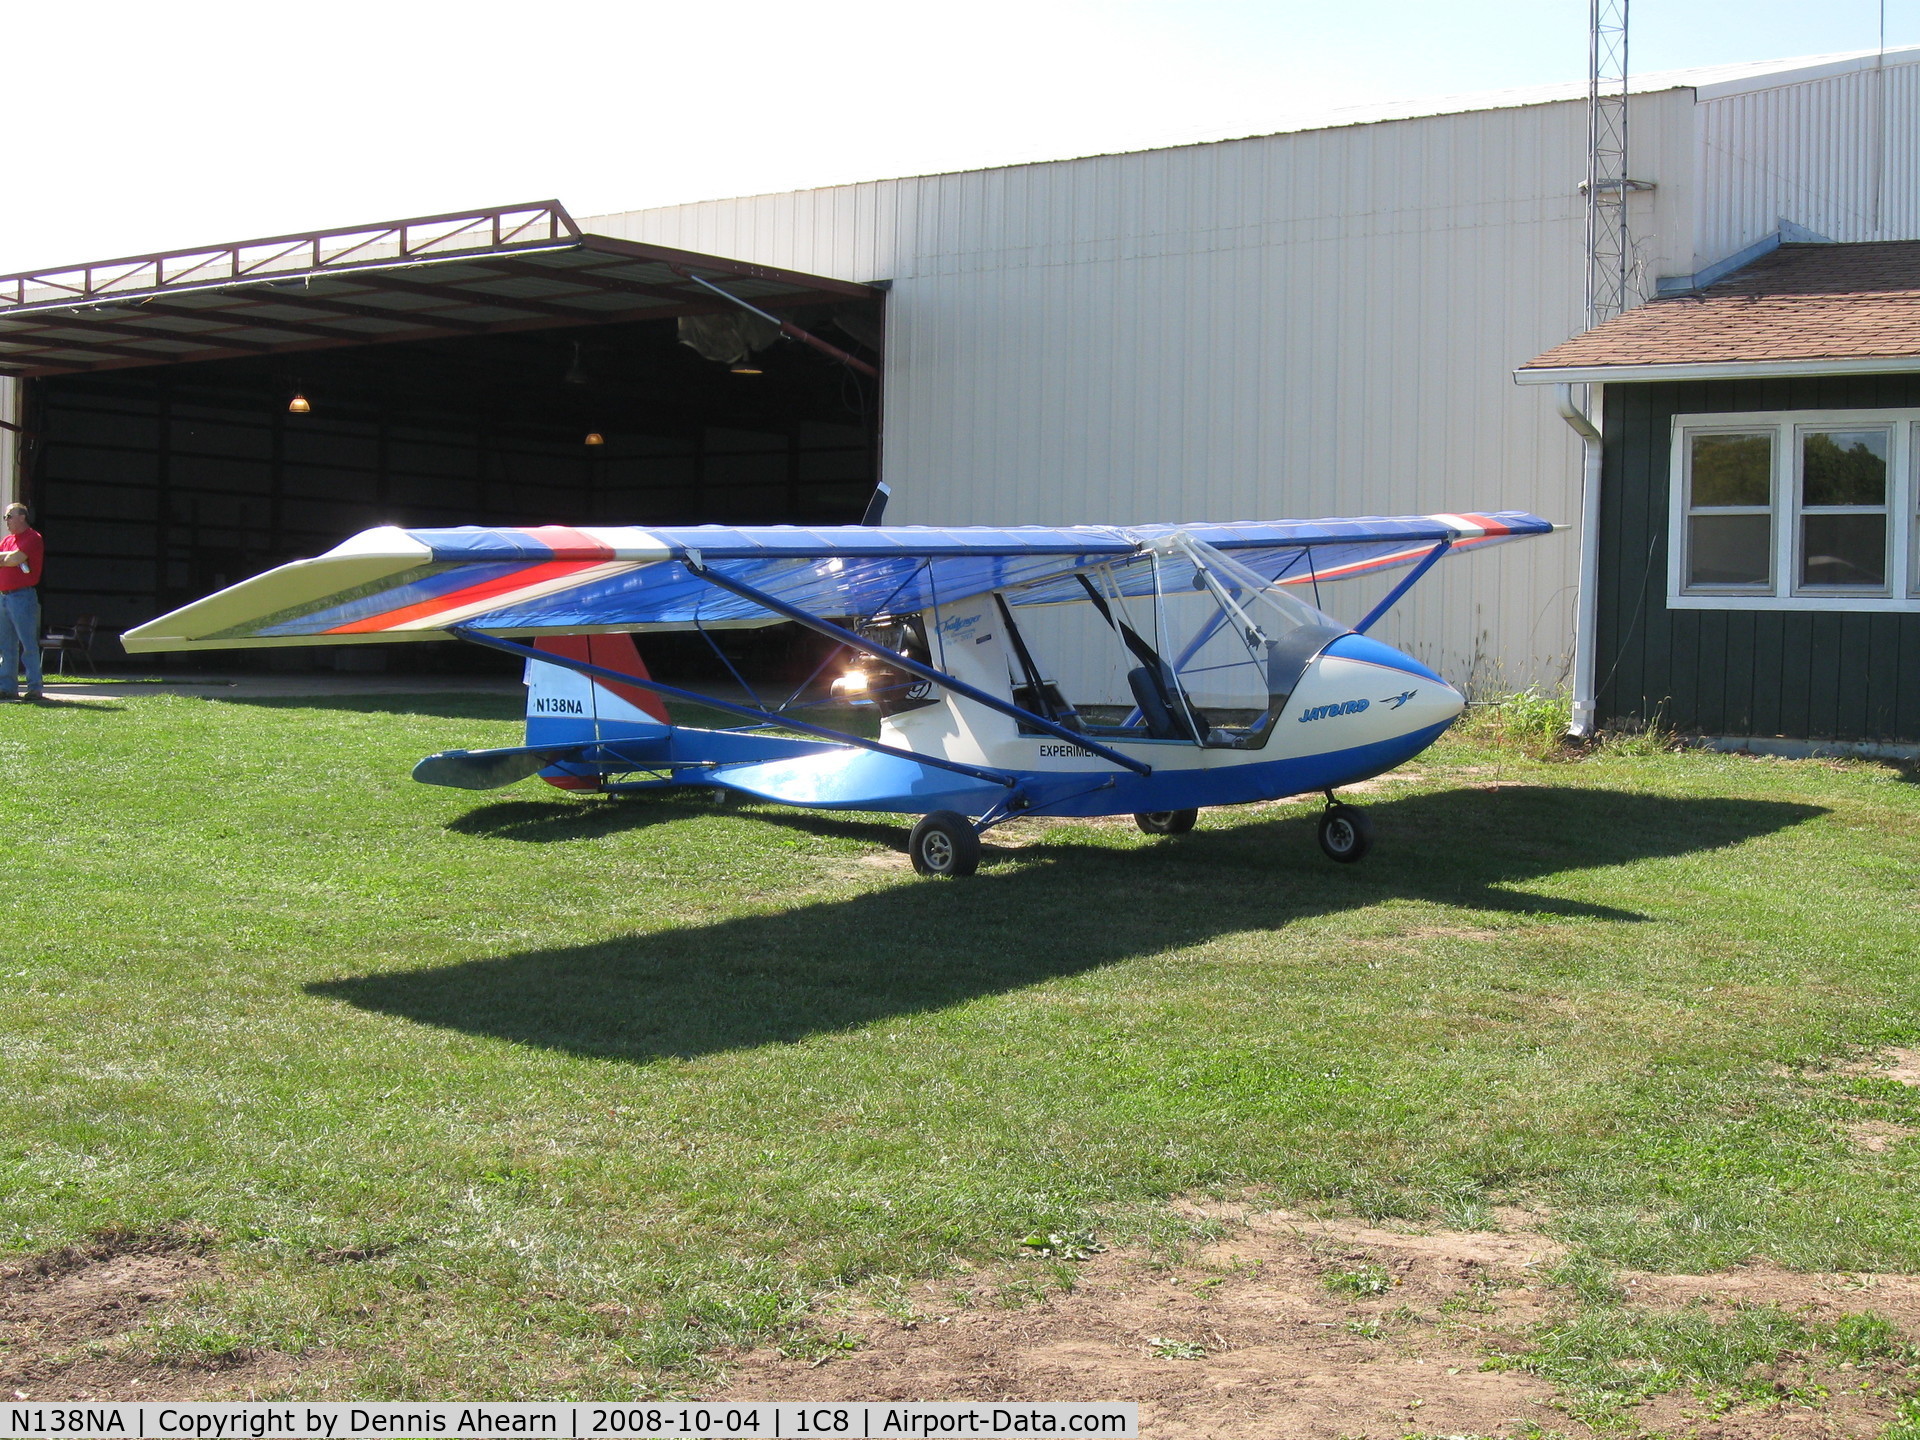 N138NA, 2000 Quad City Challenger II C/N CH2-0698-1760, Cottonwood Airport, Rockford,IL